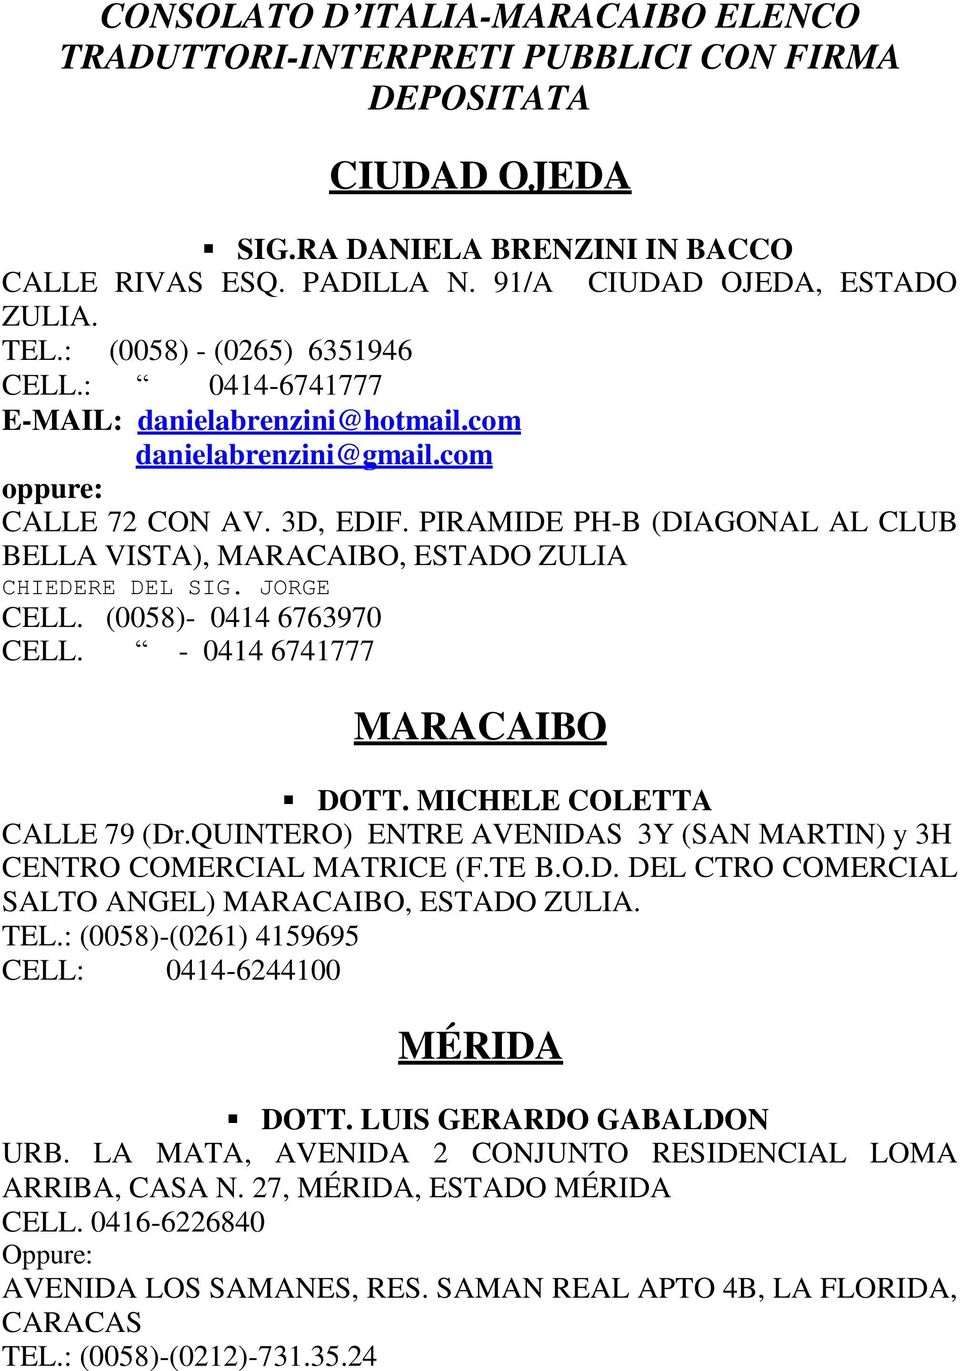 PIRAMIDE PH-B (DIAGONAL AL CLUB BELLA VISTA), MARACAIBO, ESTADO ZULIA CHIEDERE DEL SIG. JORGE CELL. (0058)- 0414 6763970 CELL. - 0414 6741777 MARACAIBO DOTT. MICHELE COLETTA CALLE 79 (Dr.